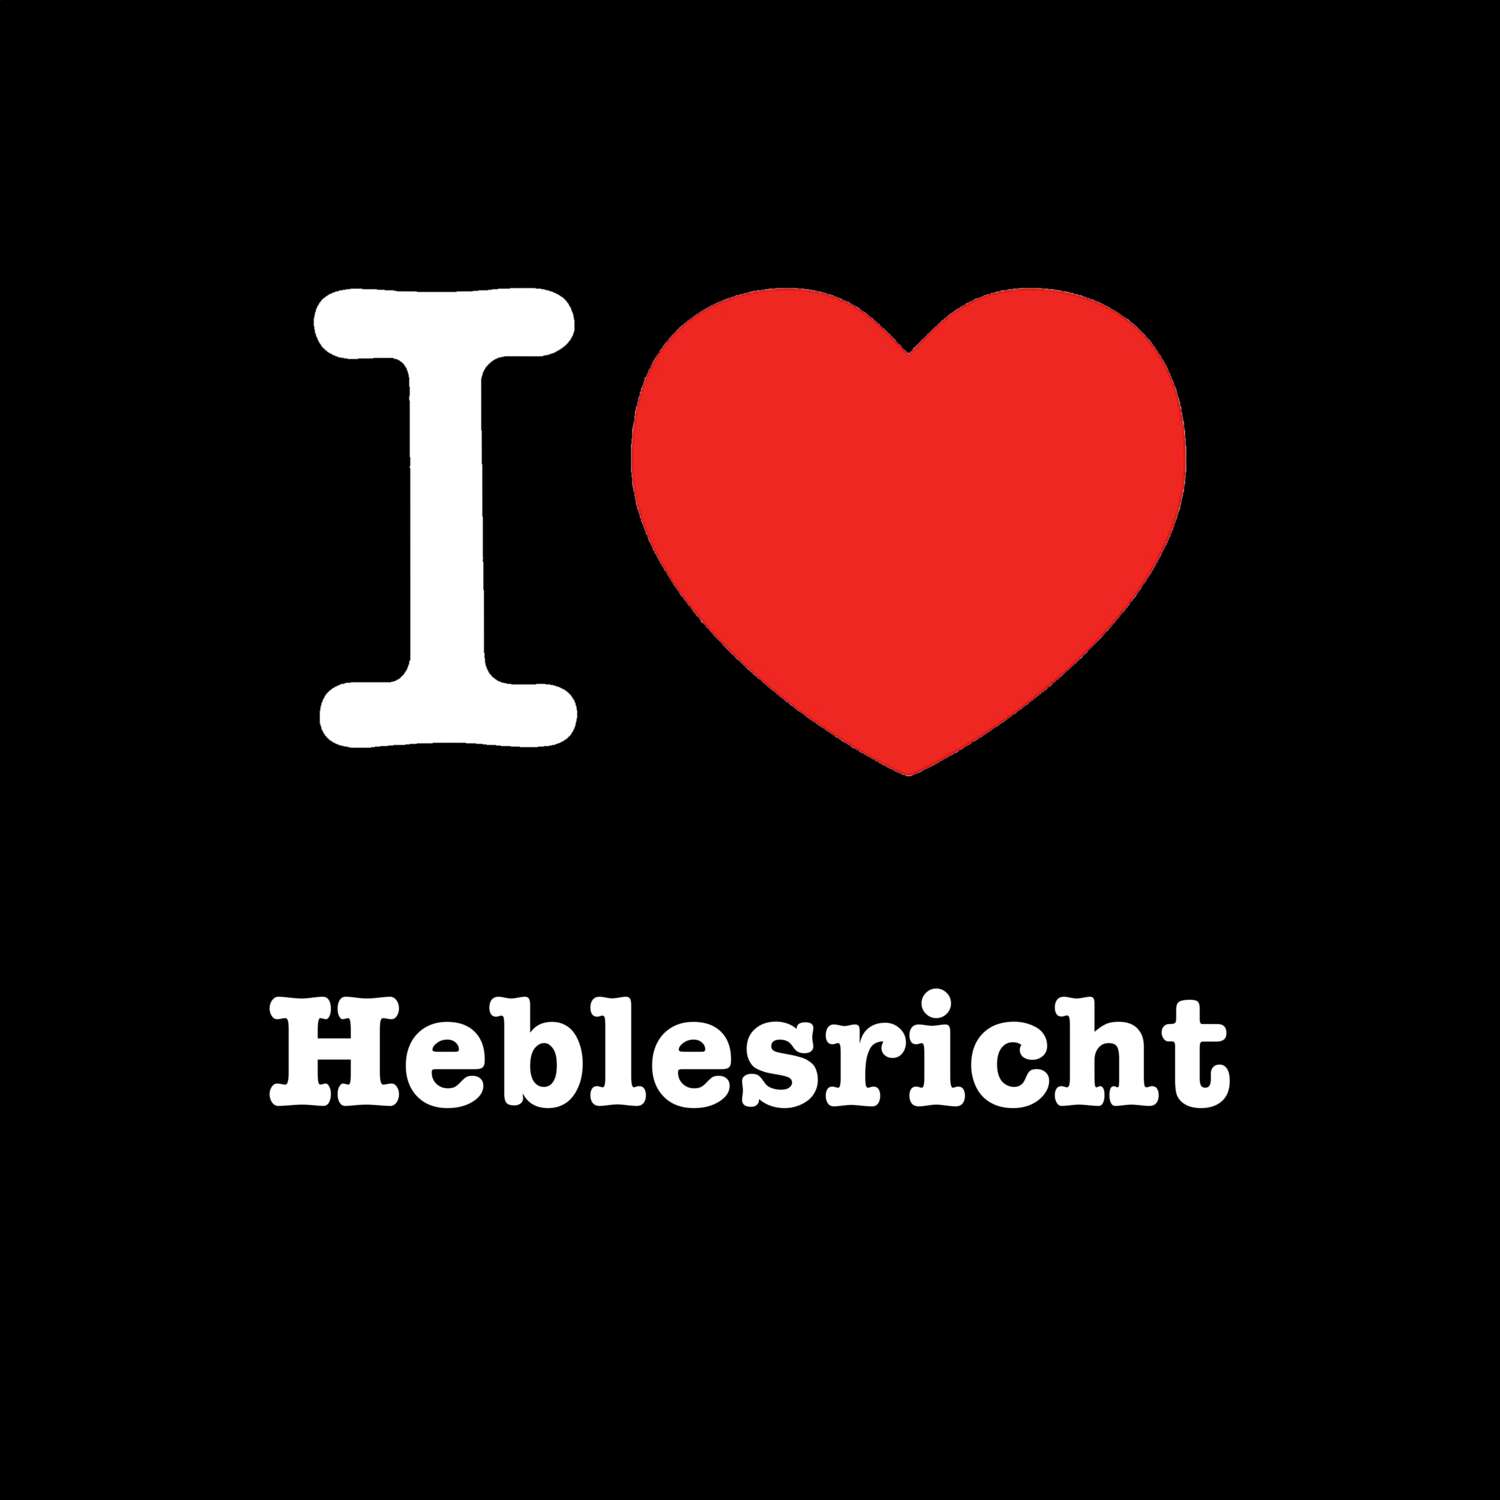 Heblesricht T-Shirt »I love«